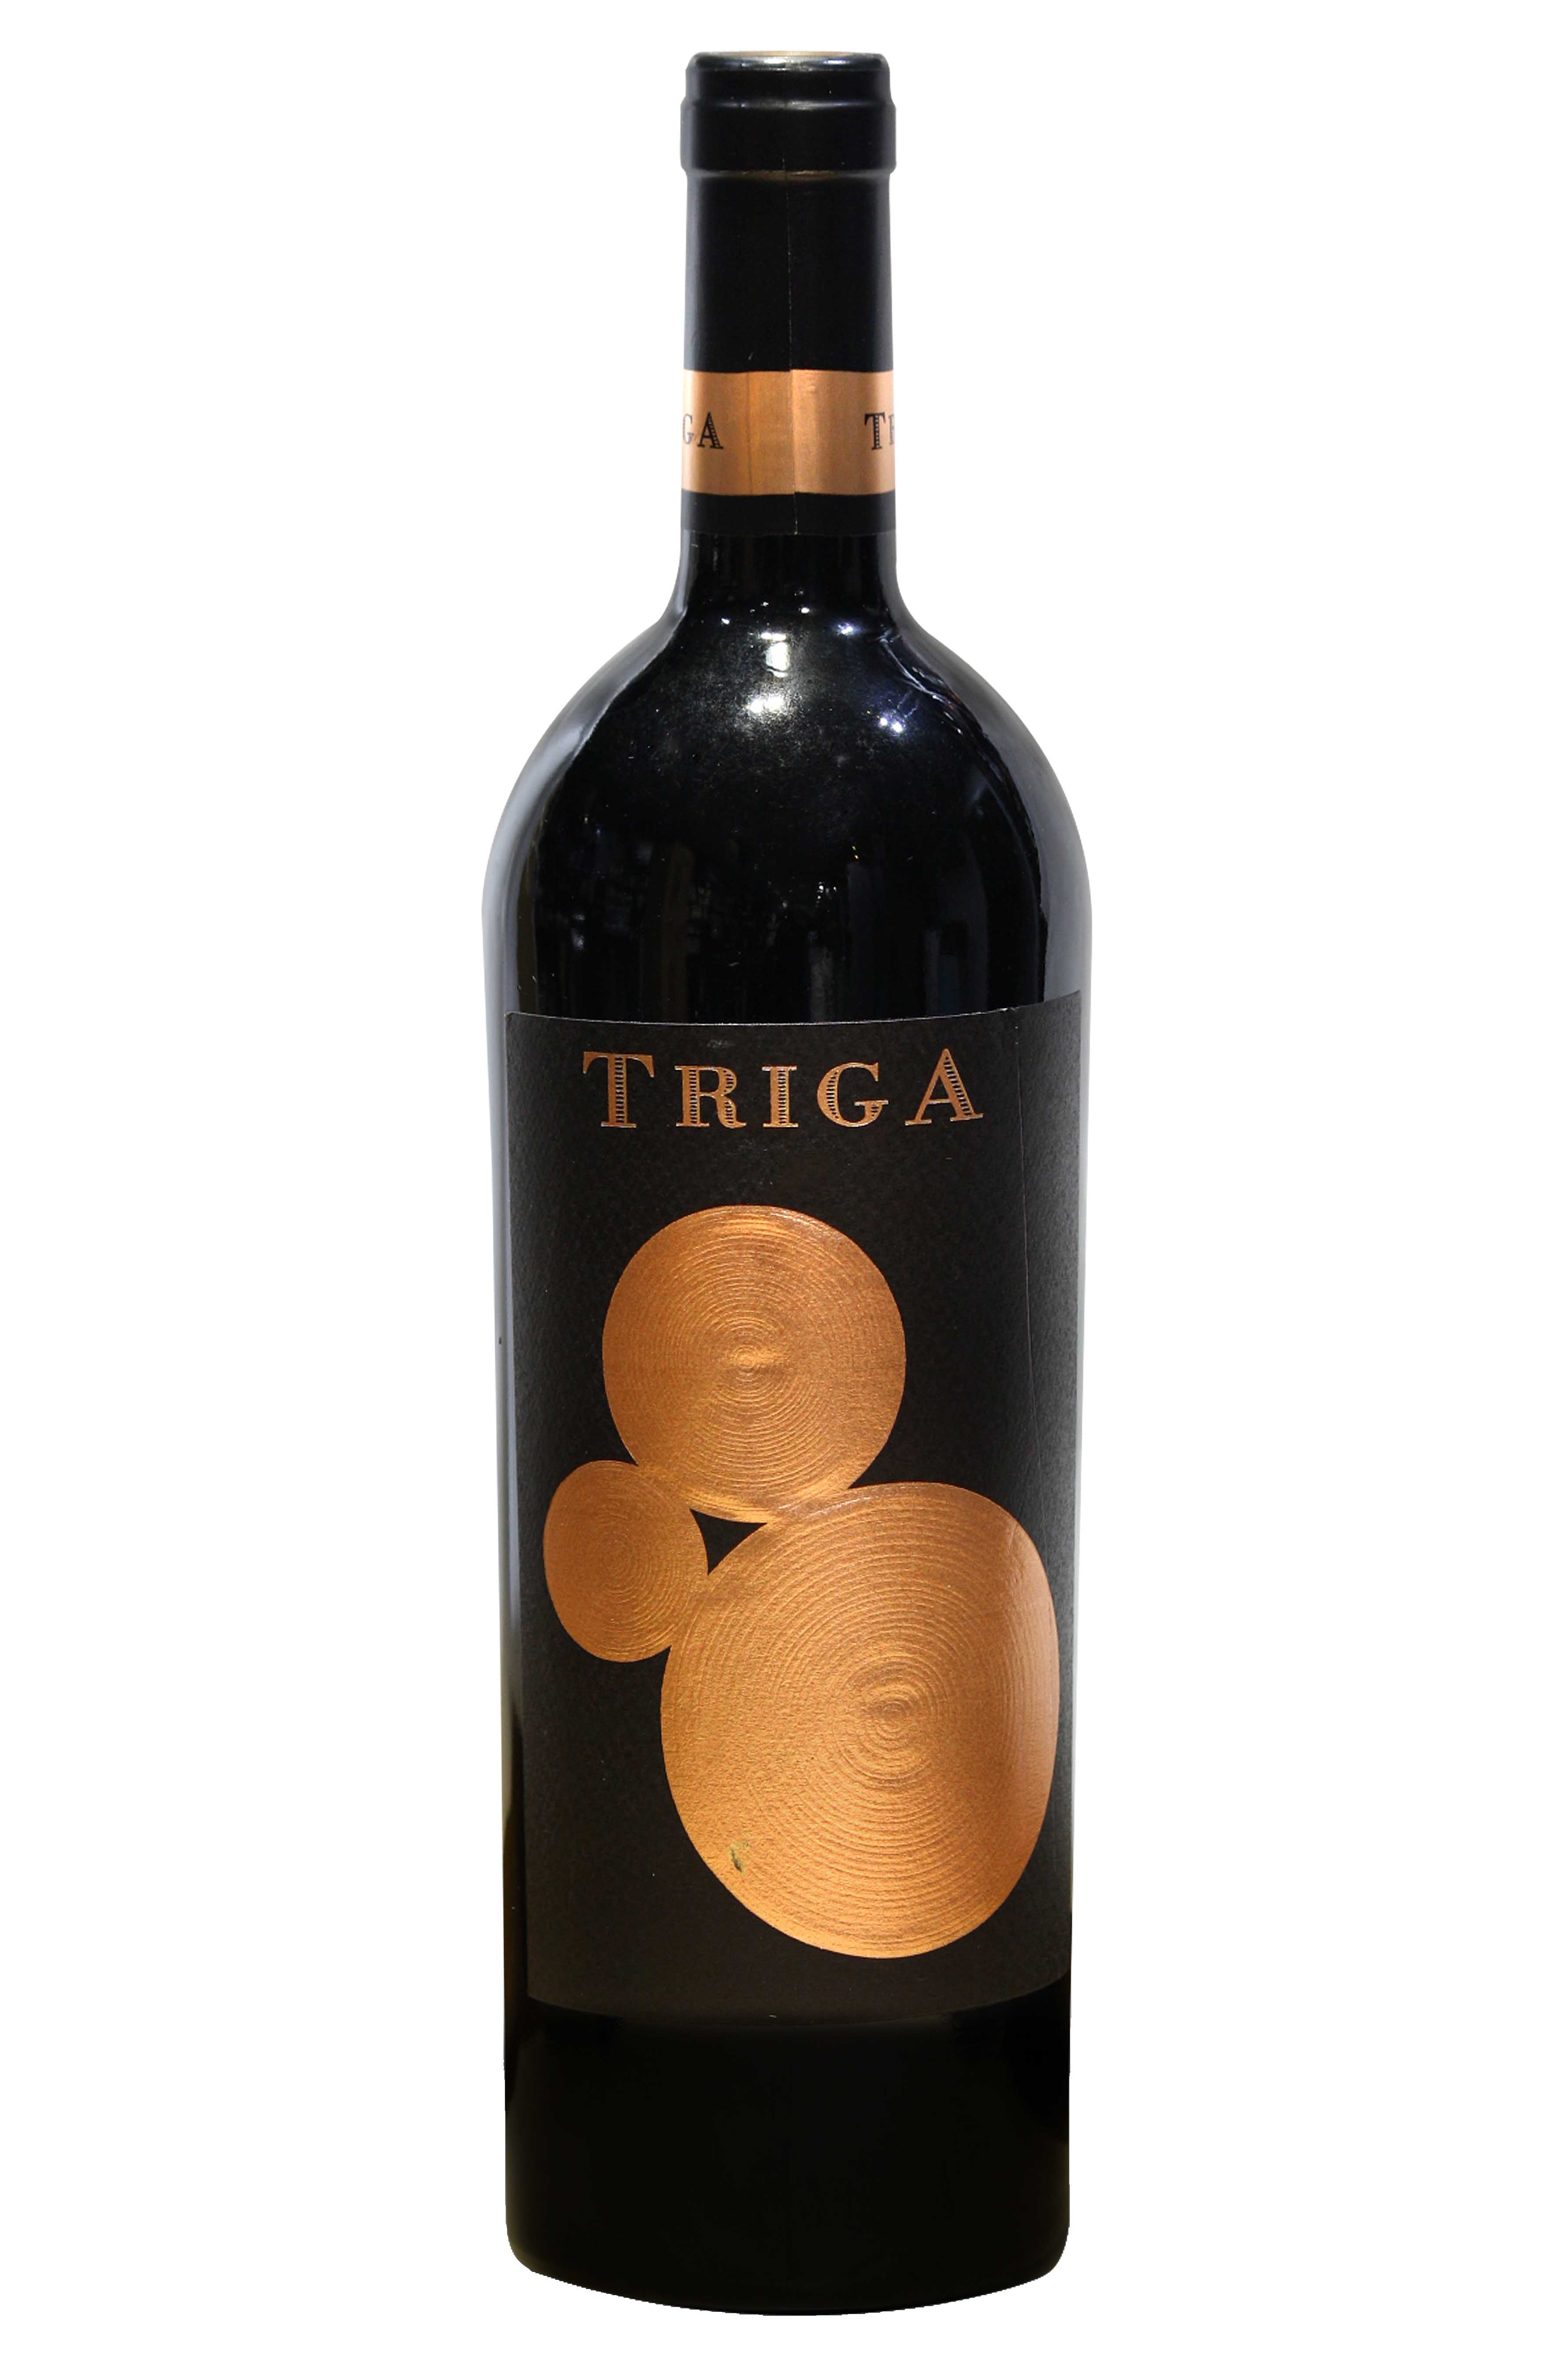 Triga red wine